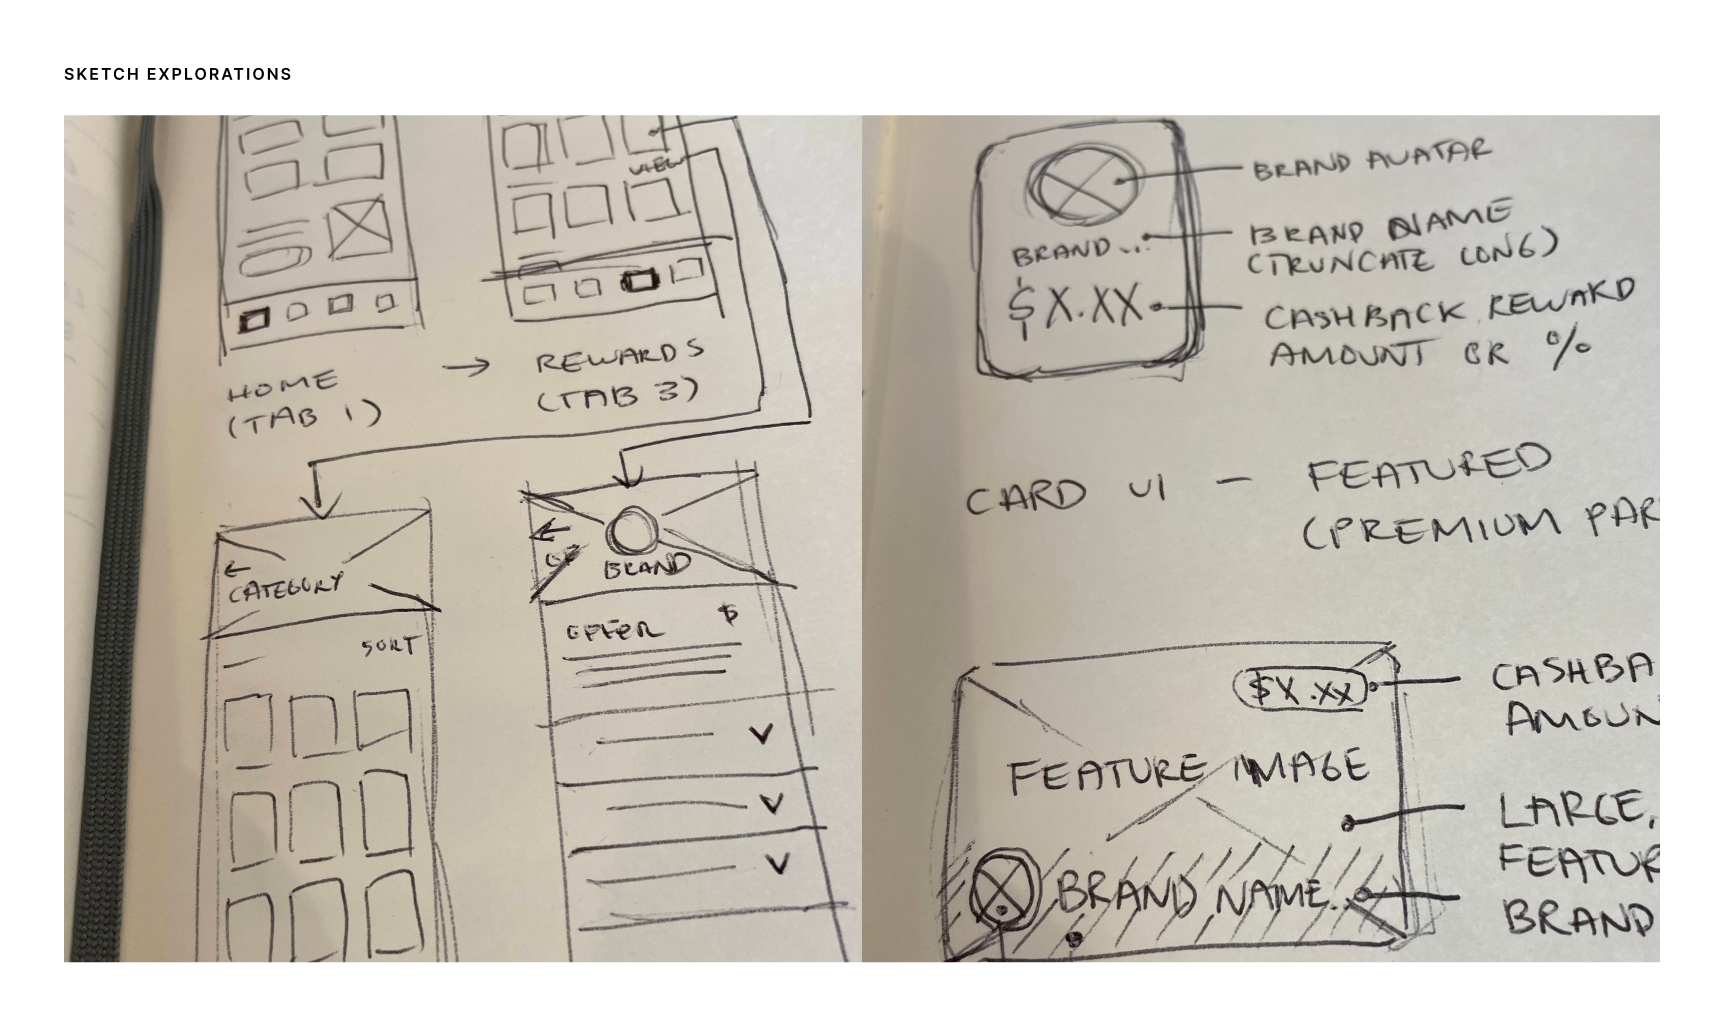 Sketch wireframes of reward cards, flows, screens